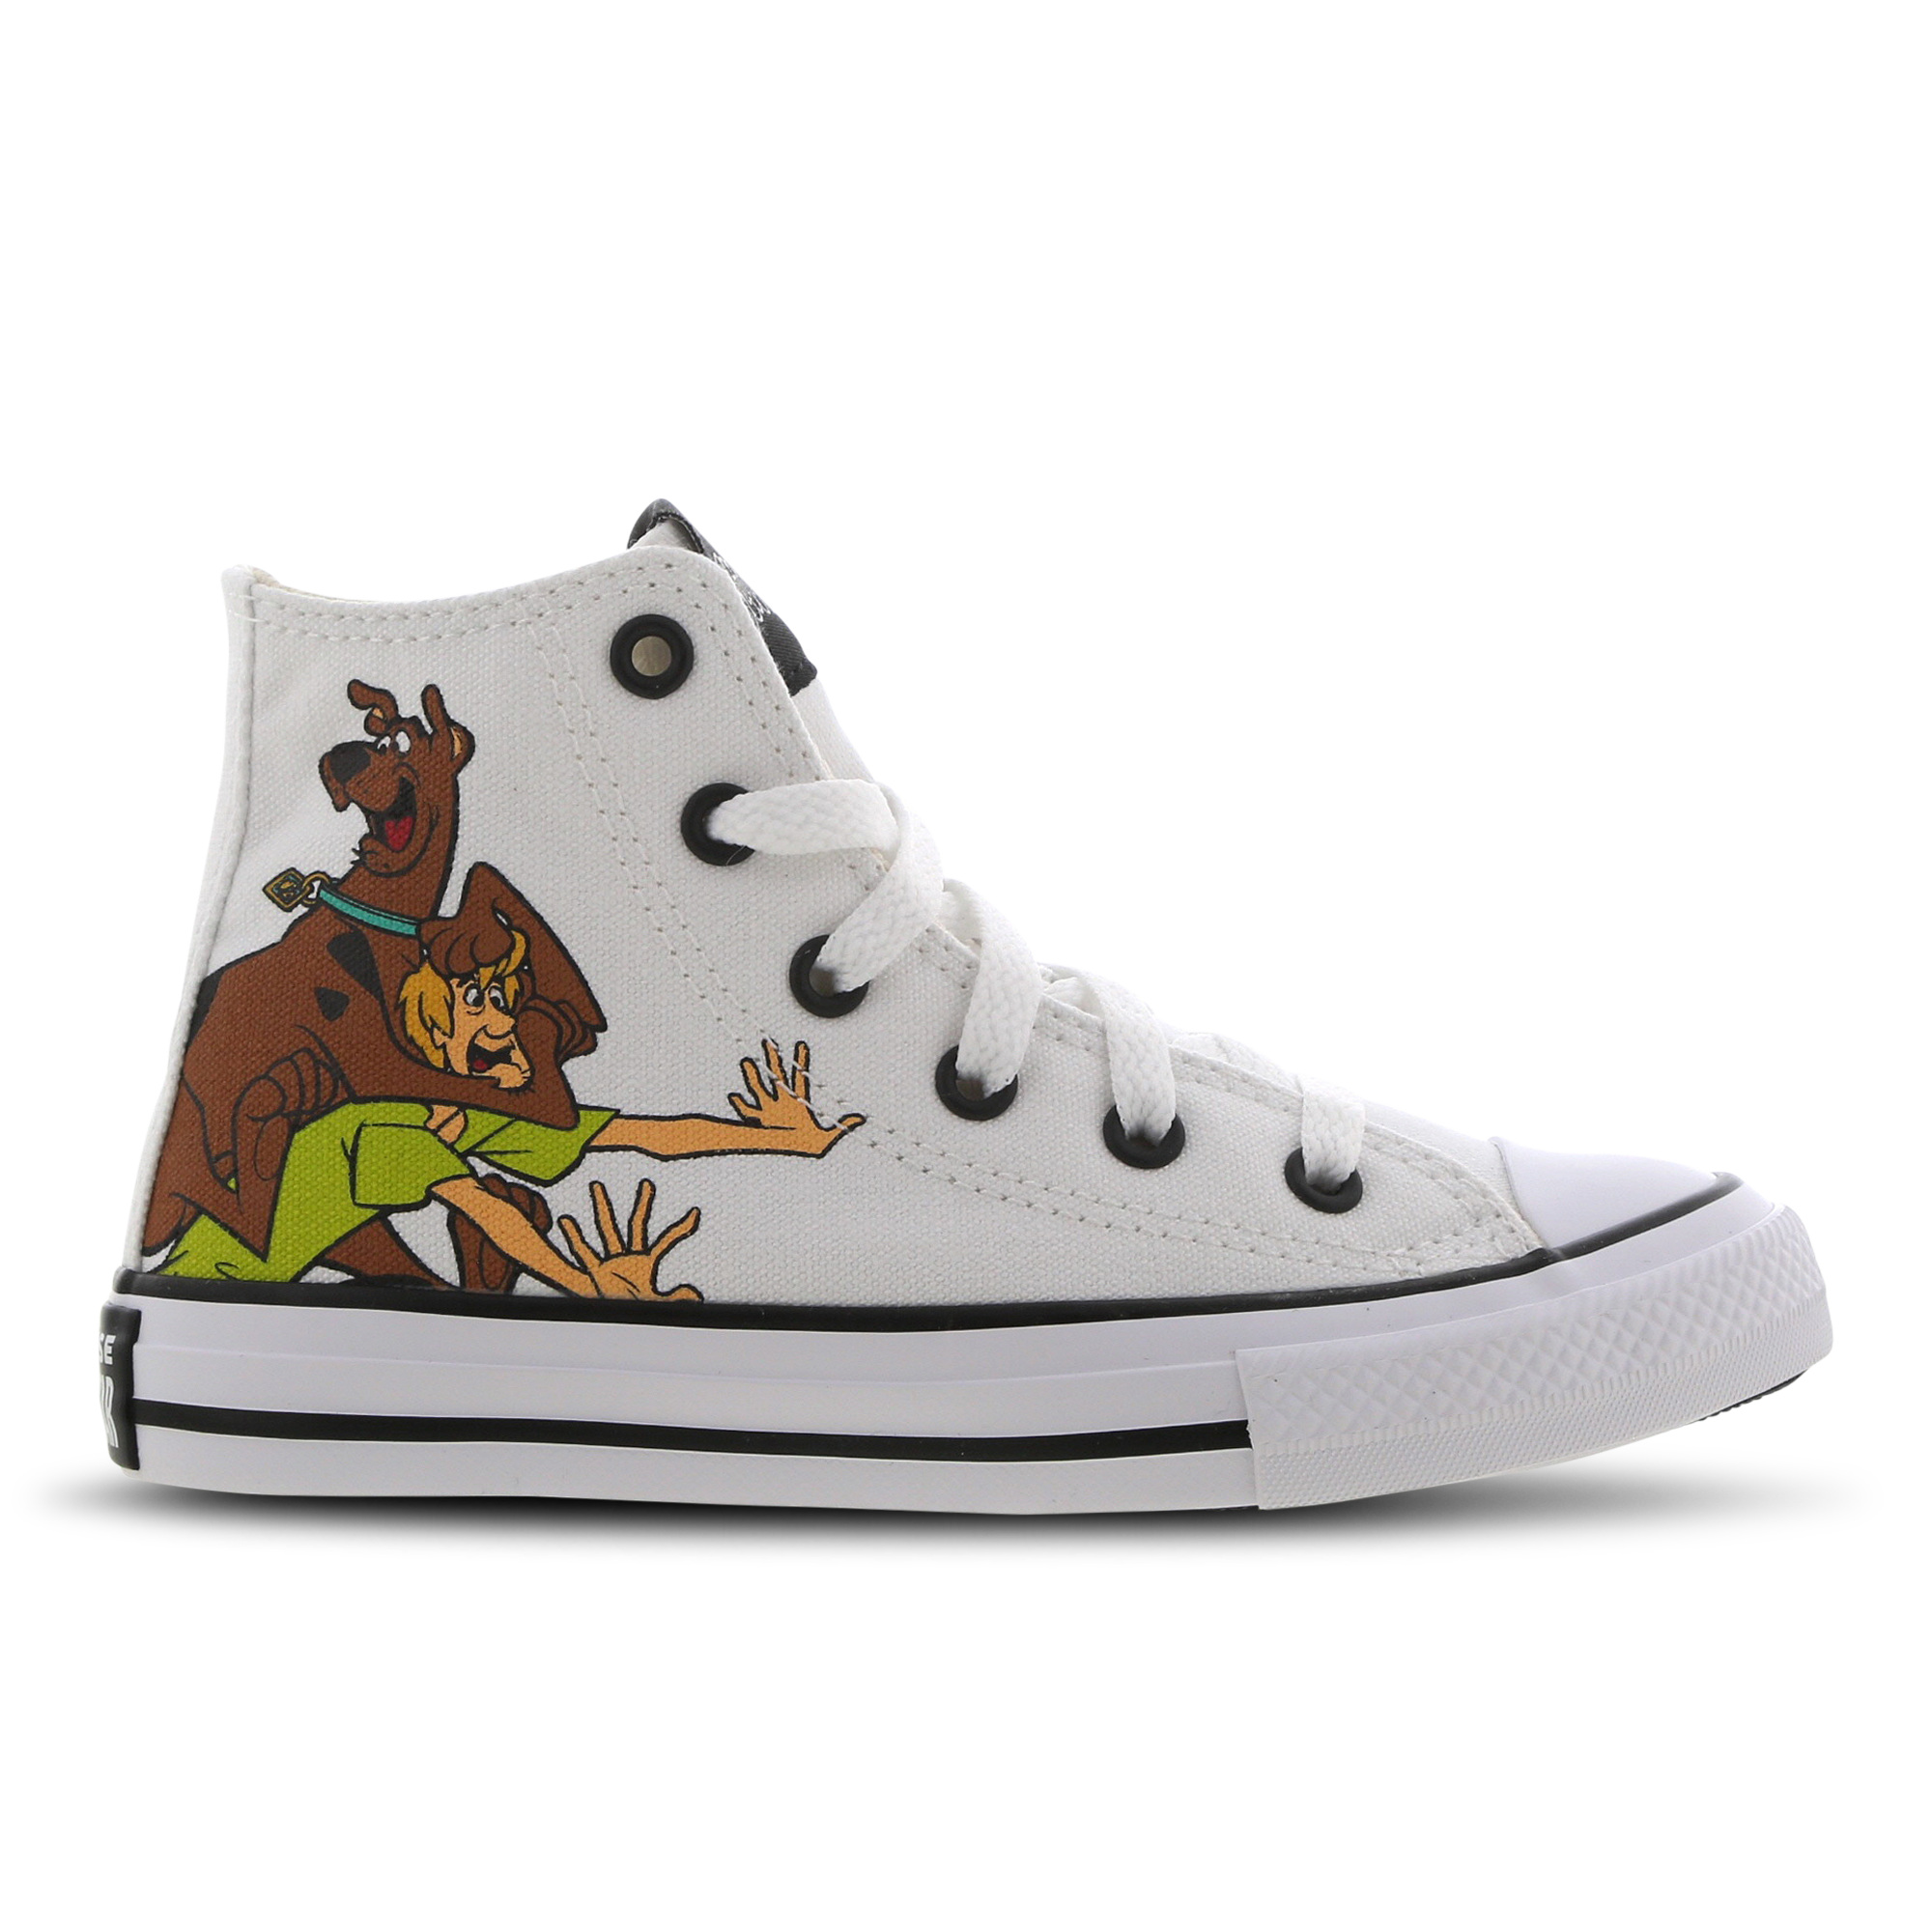 Converse Chuck Taylor All Star Scooby Doo @ Footlocker